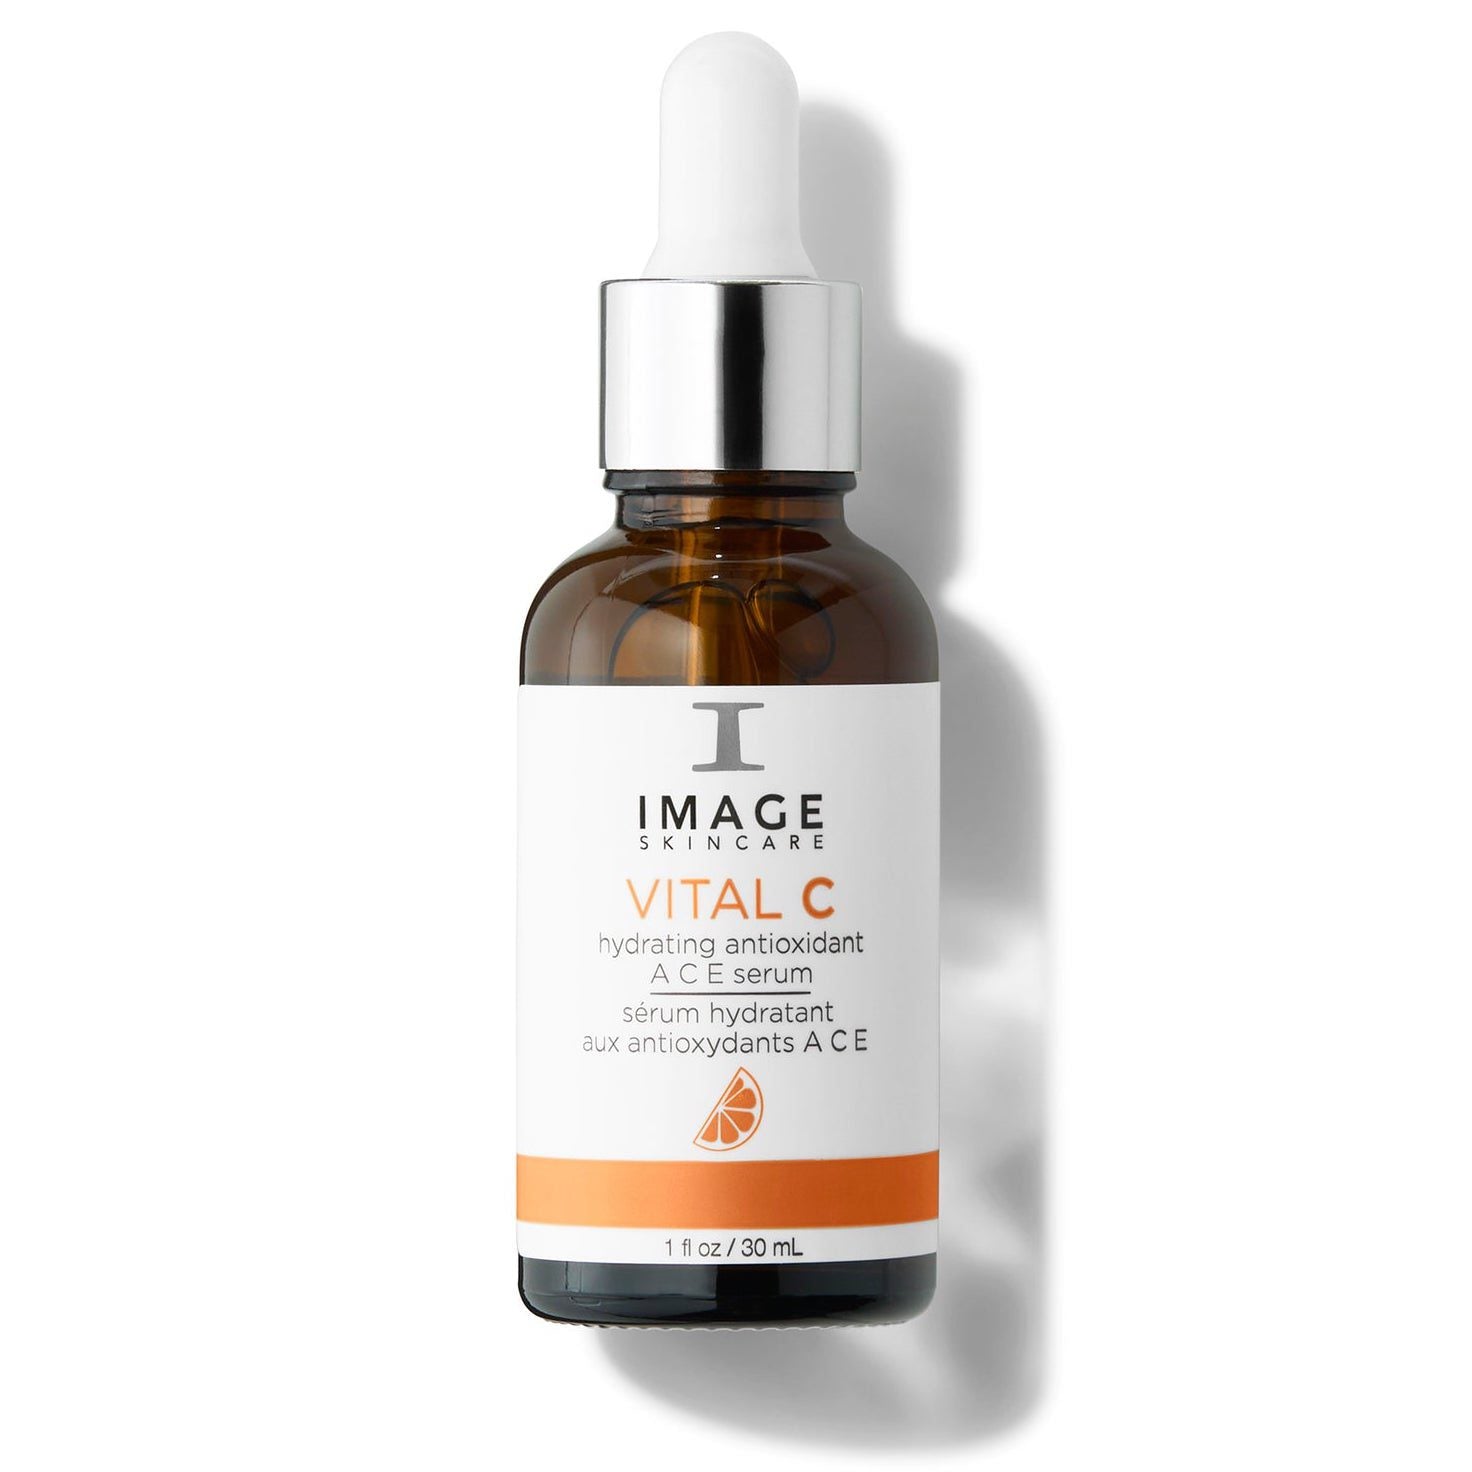 Image Skincare Image Skincare | VITAL C Hydrating Antioxidant A C E Serum | 30ml - SkinShop